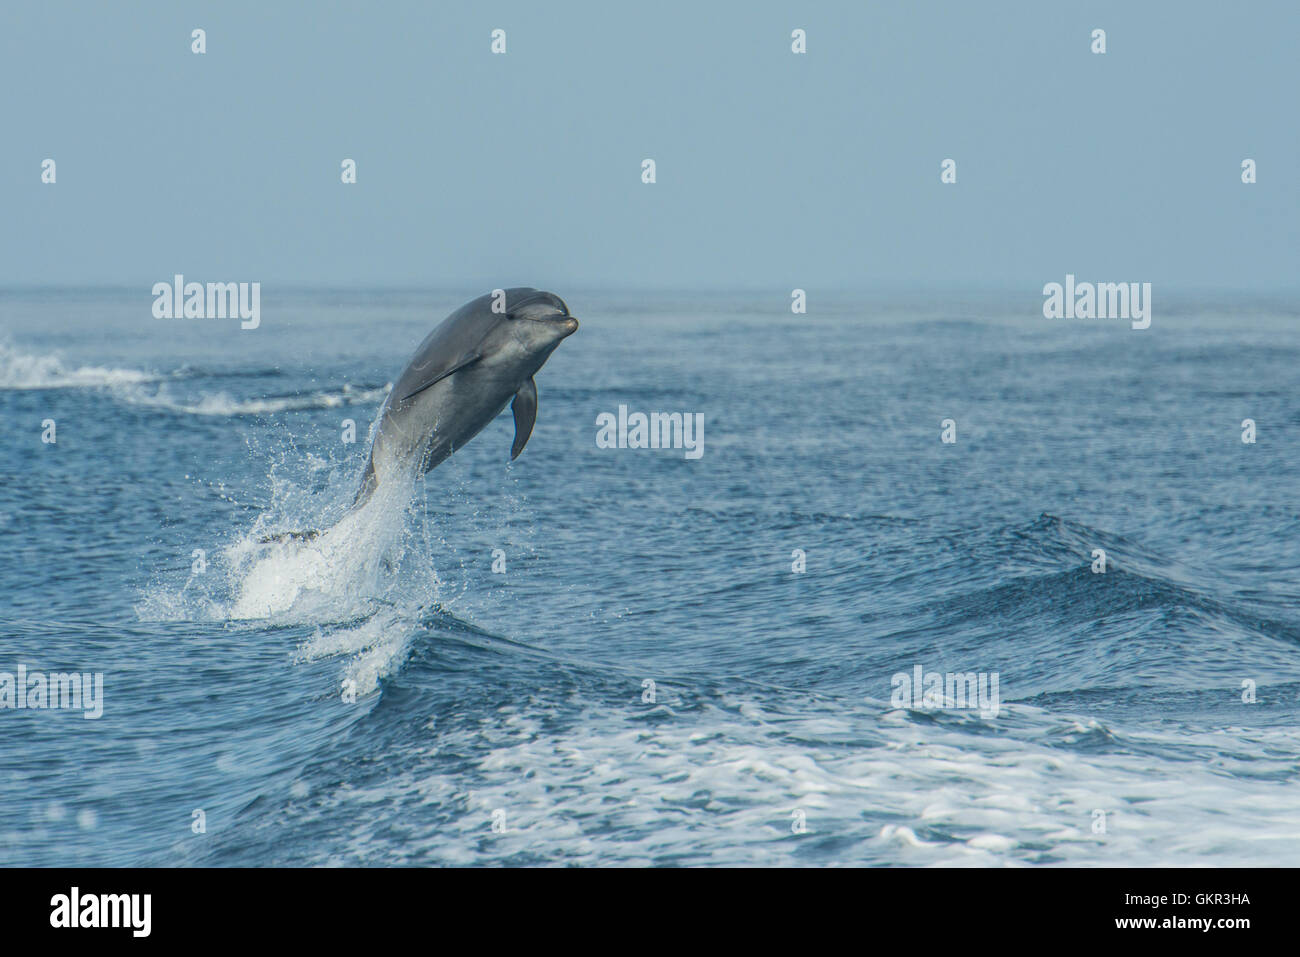 Comunes de delfín mular (Tursiops truncatus) Foto de stock